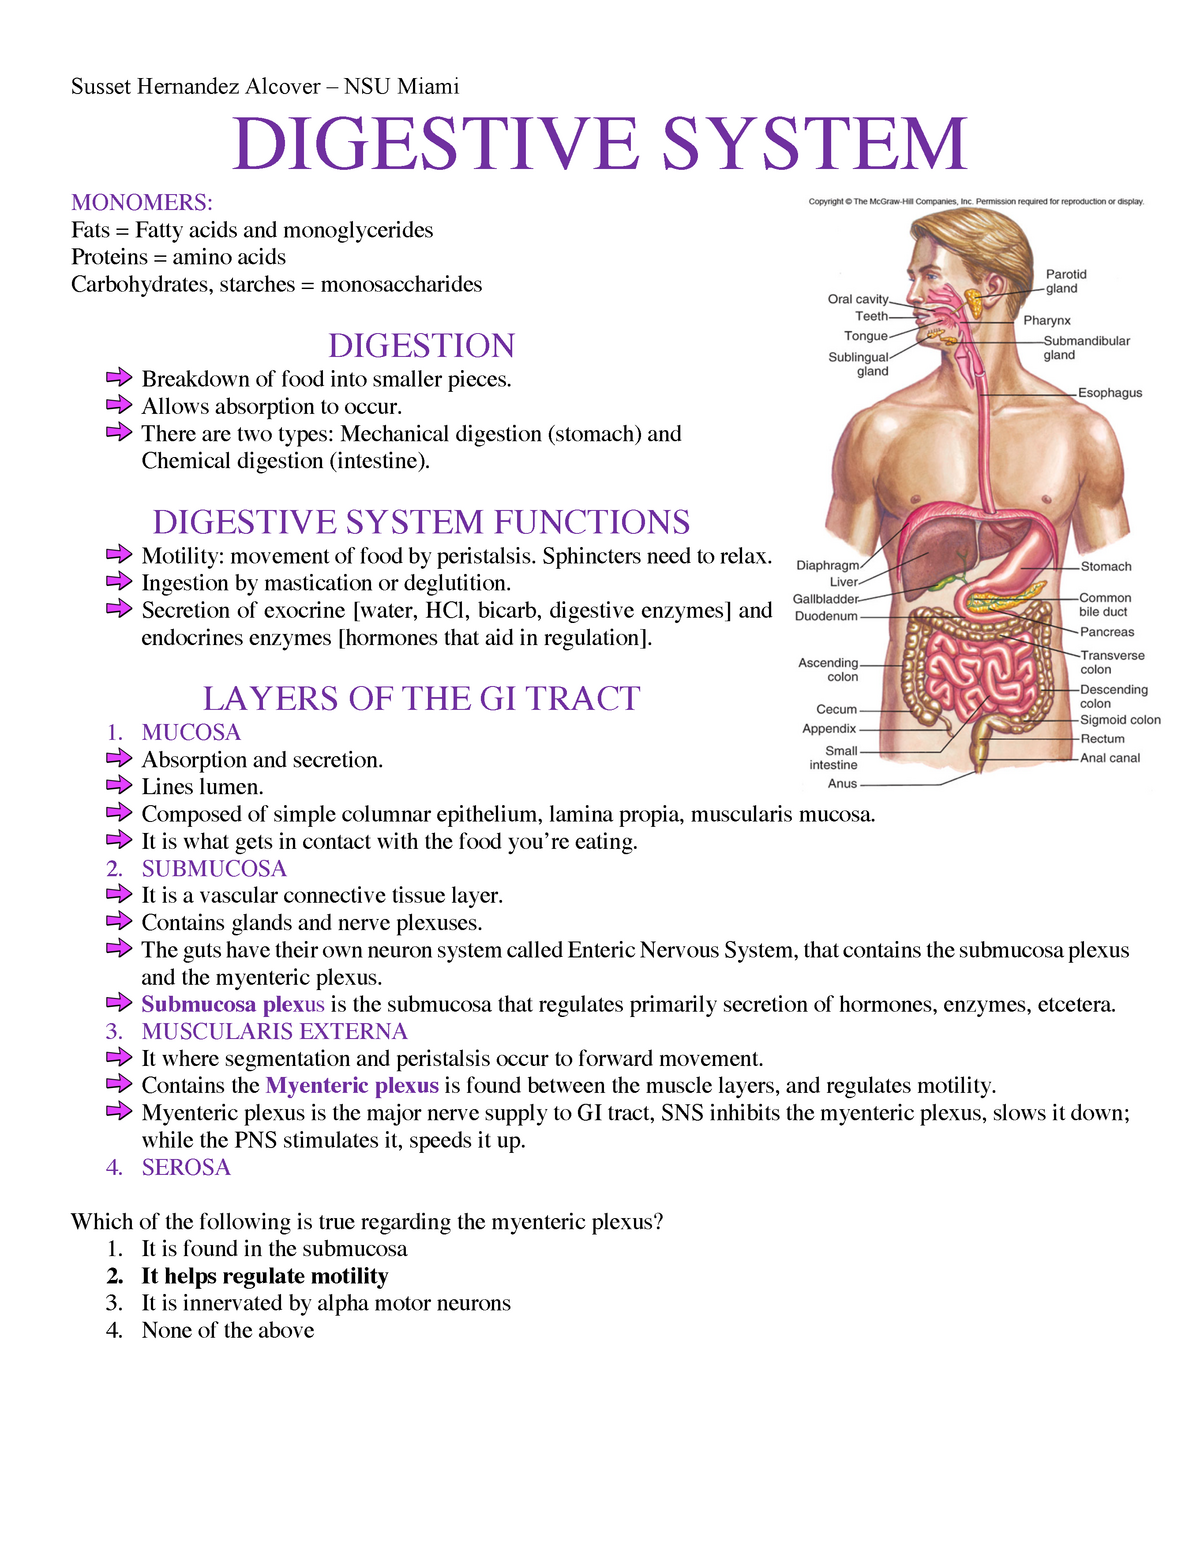 digestive system essay introduction